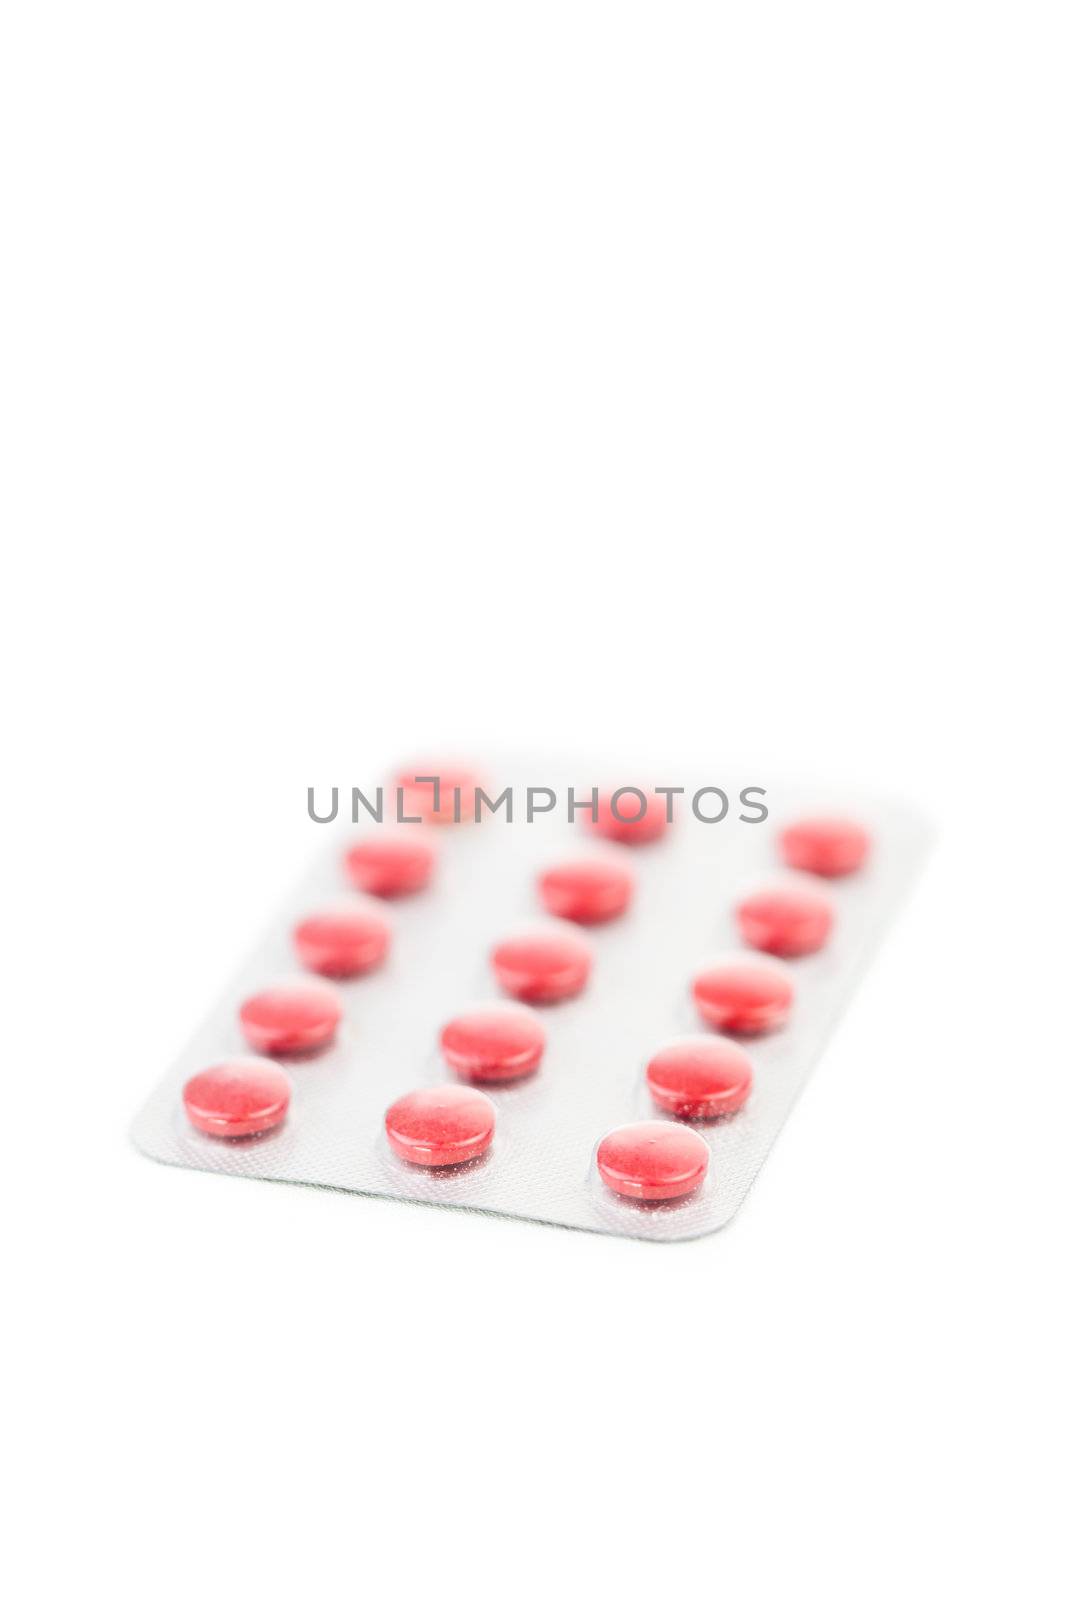 Red pills by Wavebreakmedia